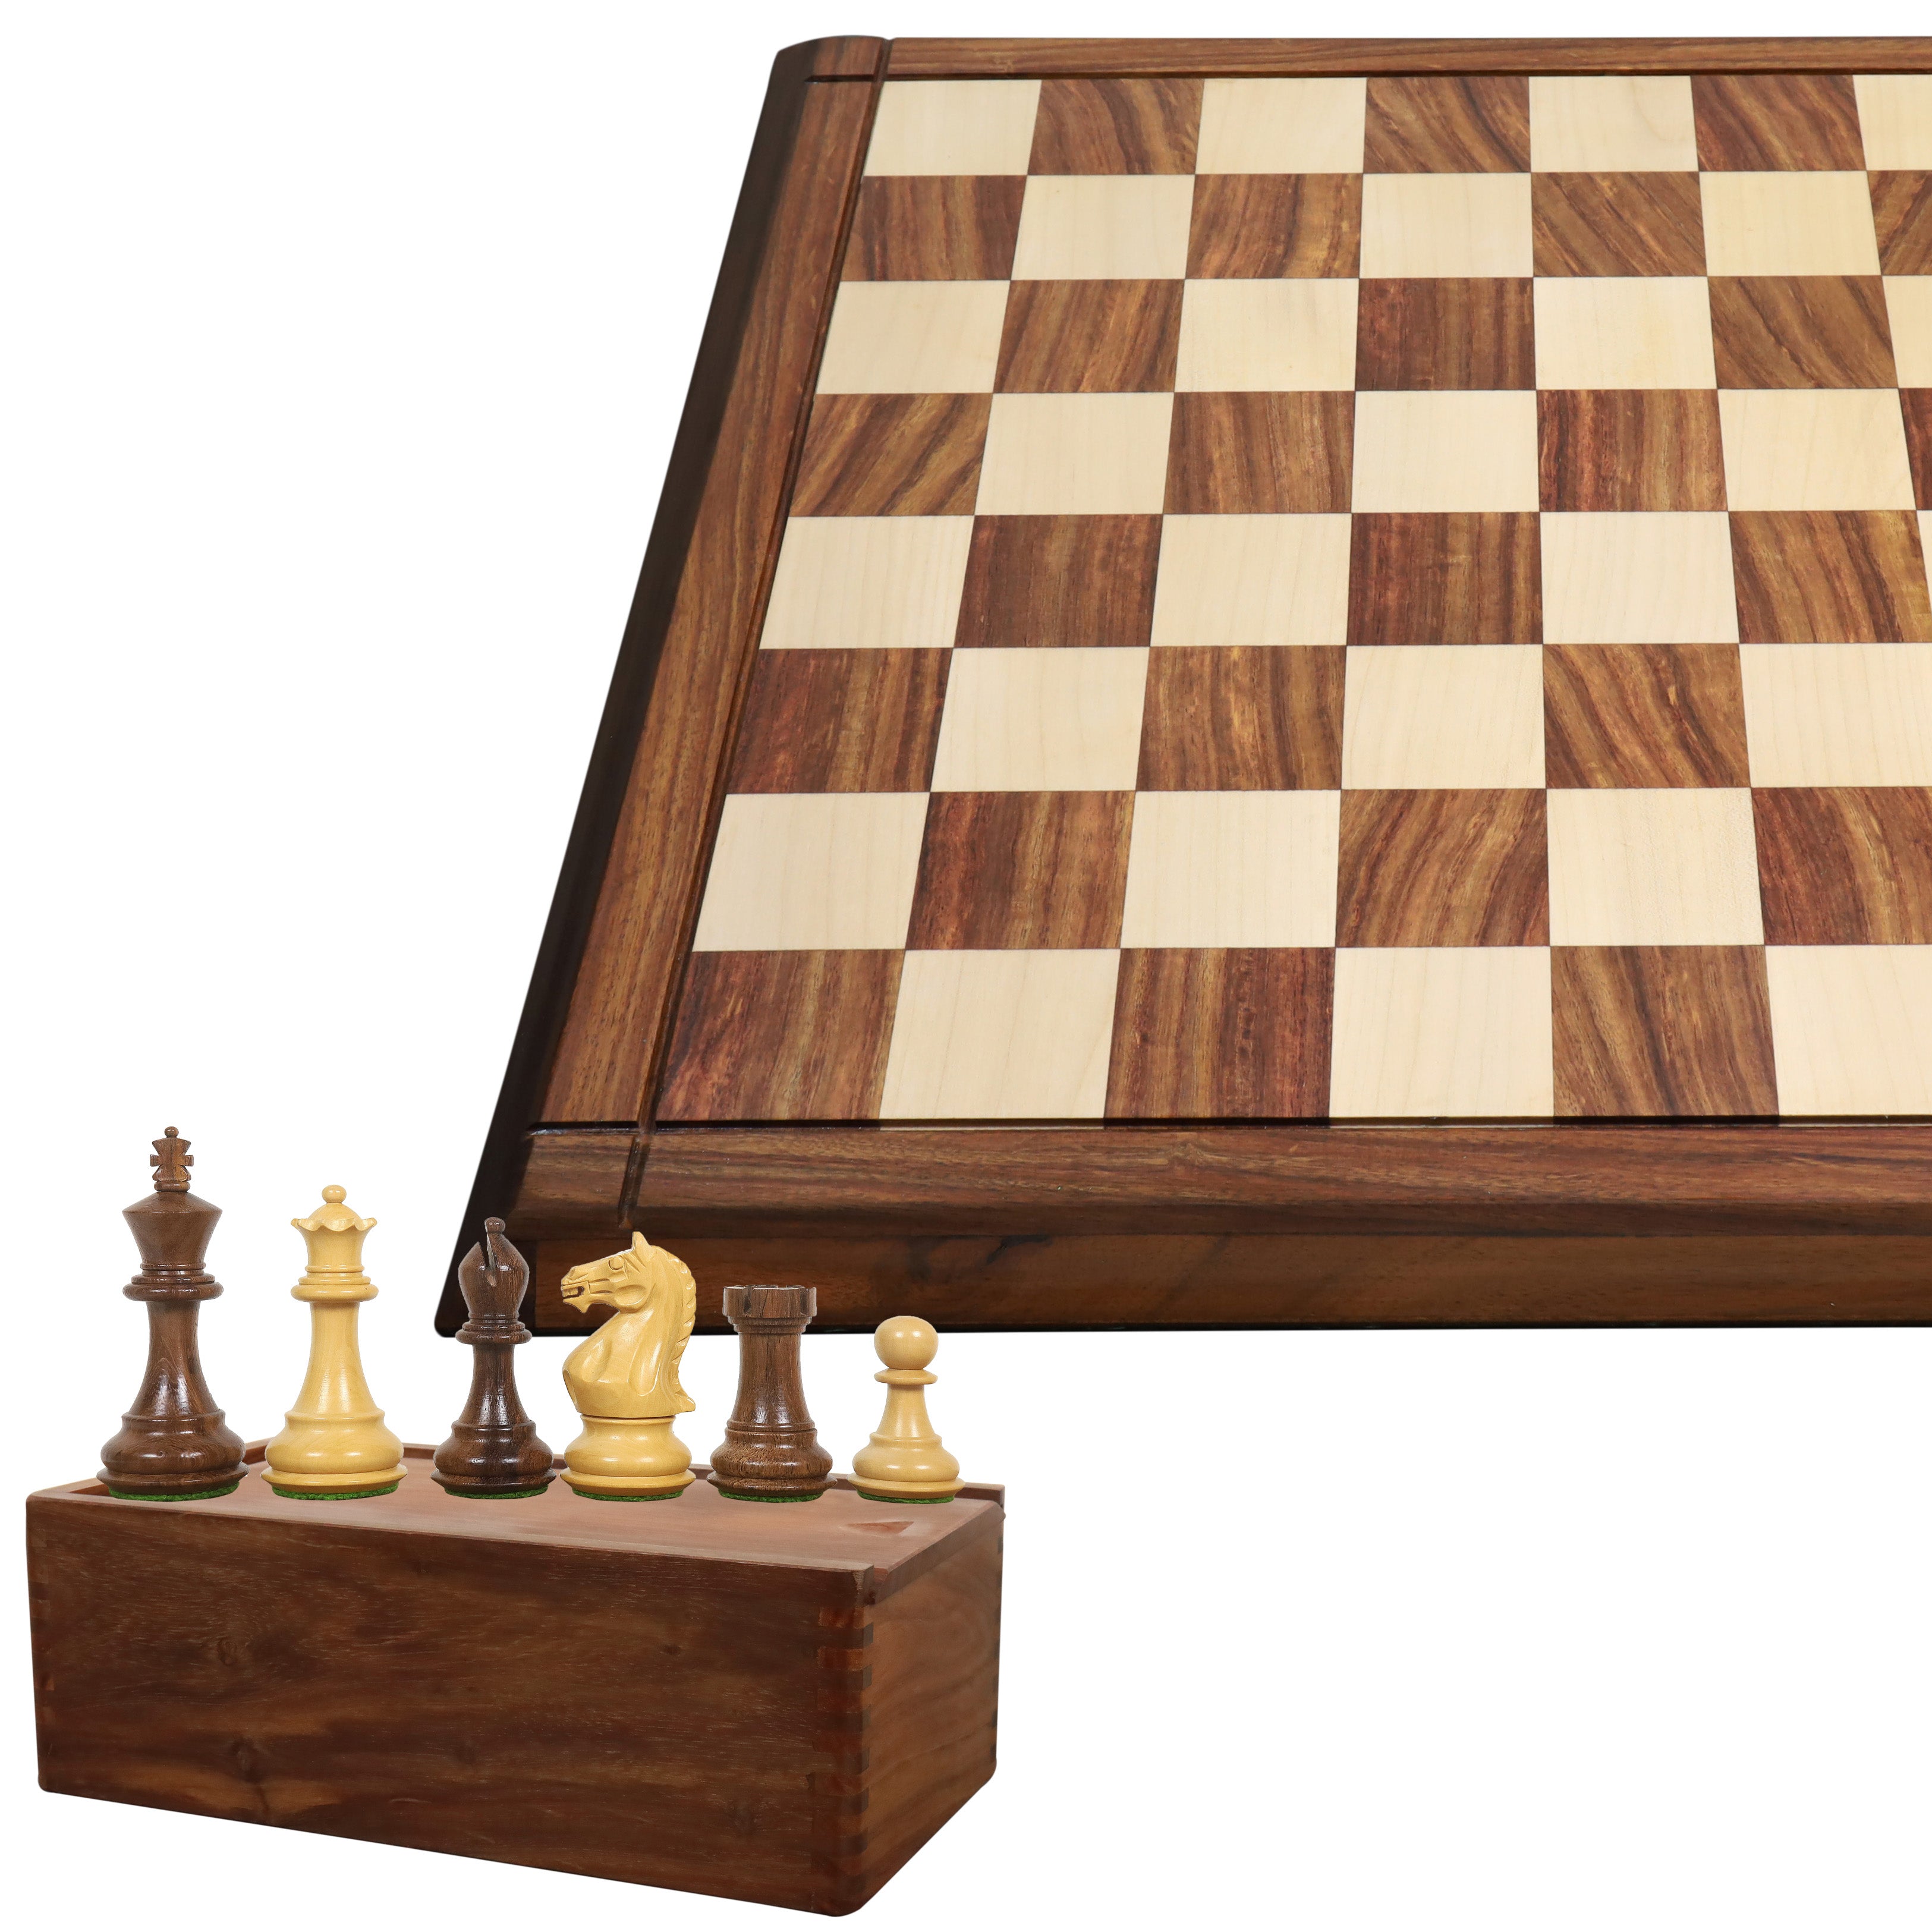 3.75" Queens Gambit Staunton Chess Pieces With 21" Drueke Style Matt Finish Chess Board And Storage Box - Golden Rosewood & Maple Wood